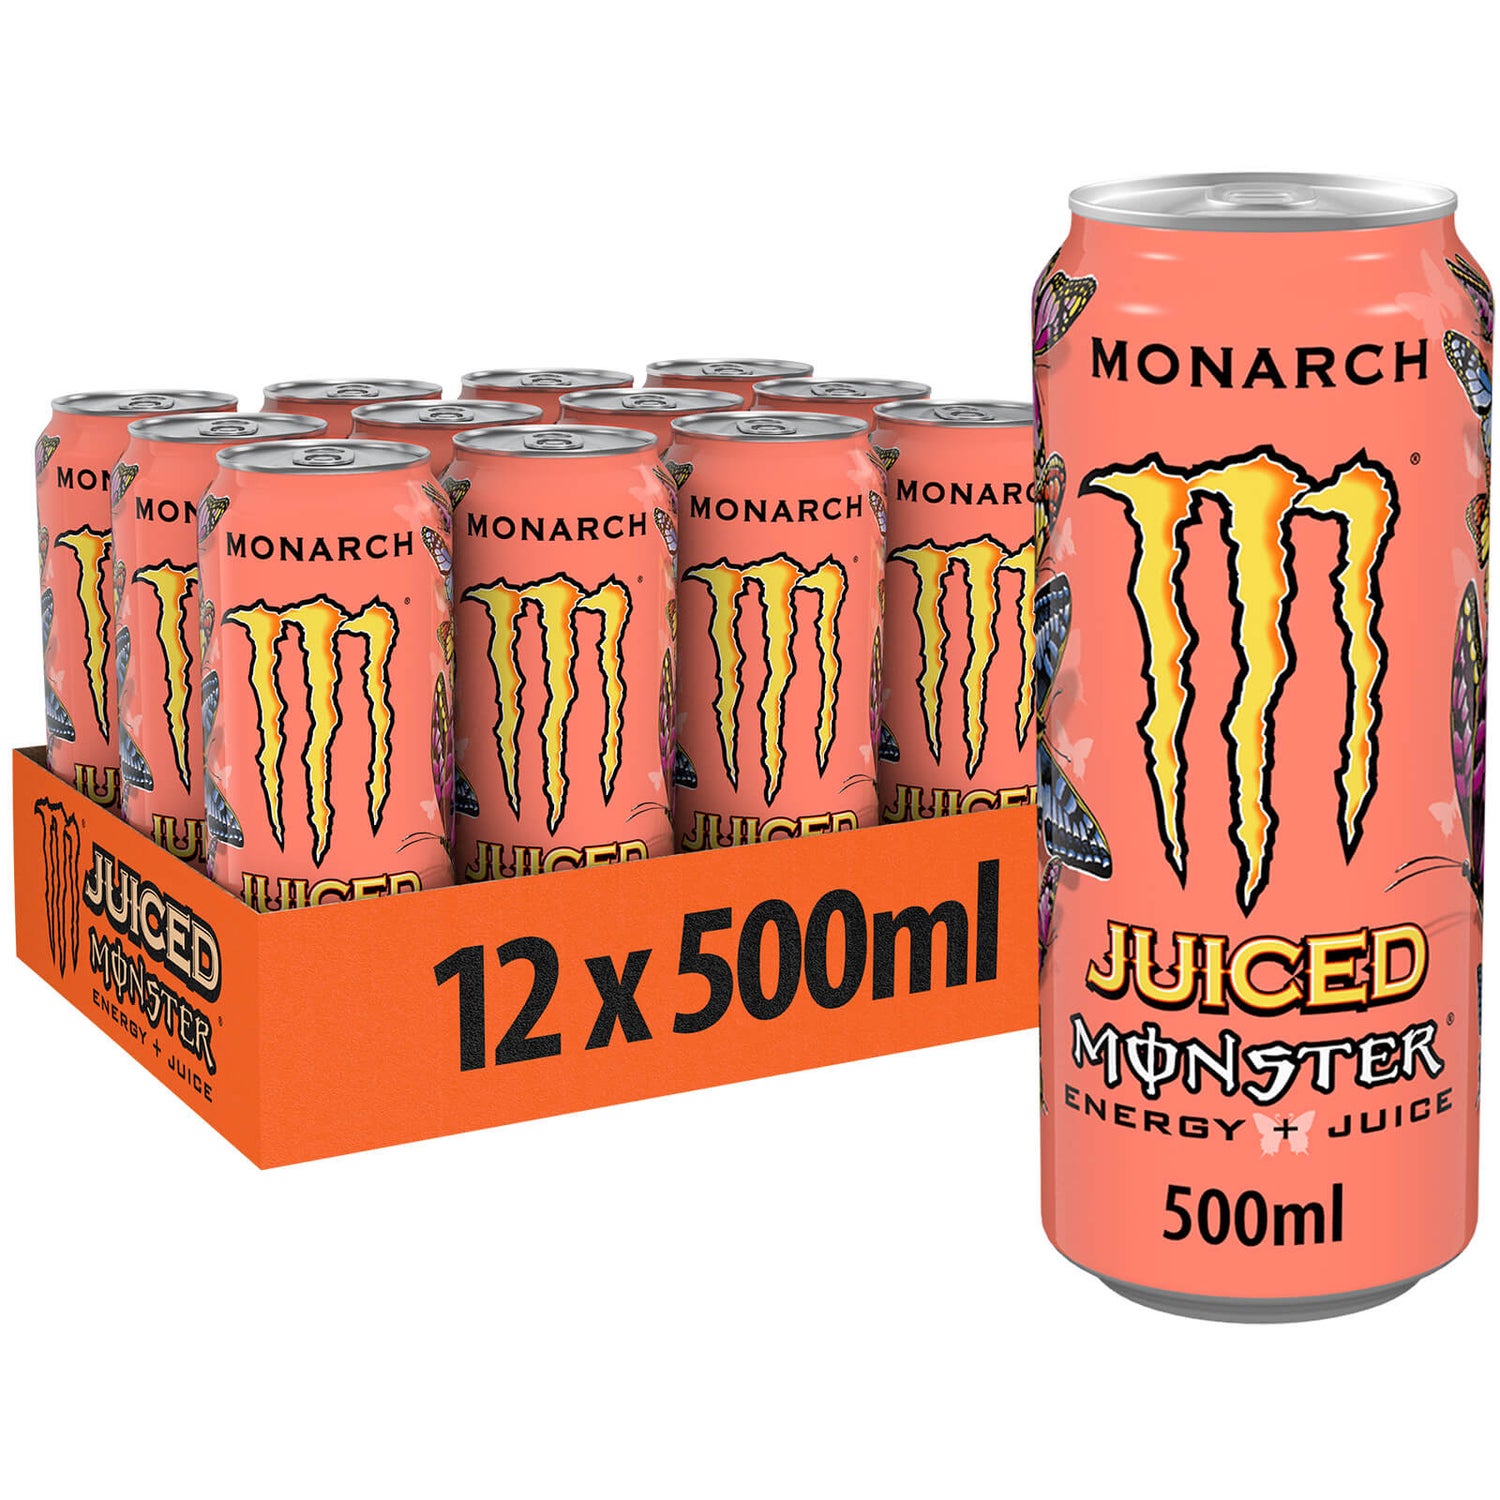 Monster Energy Drink Monarch 12 x 500ml